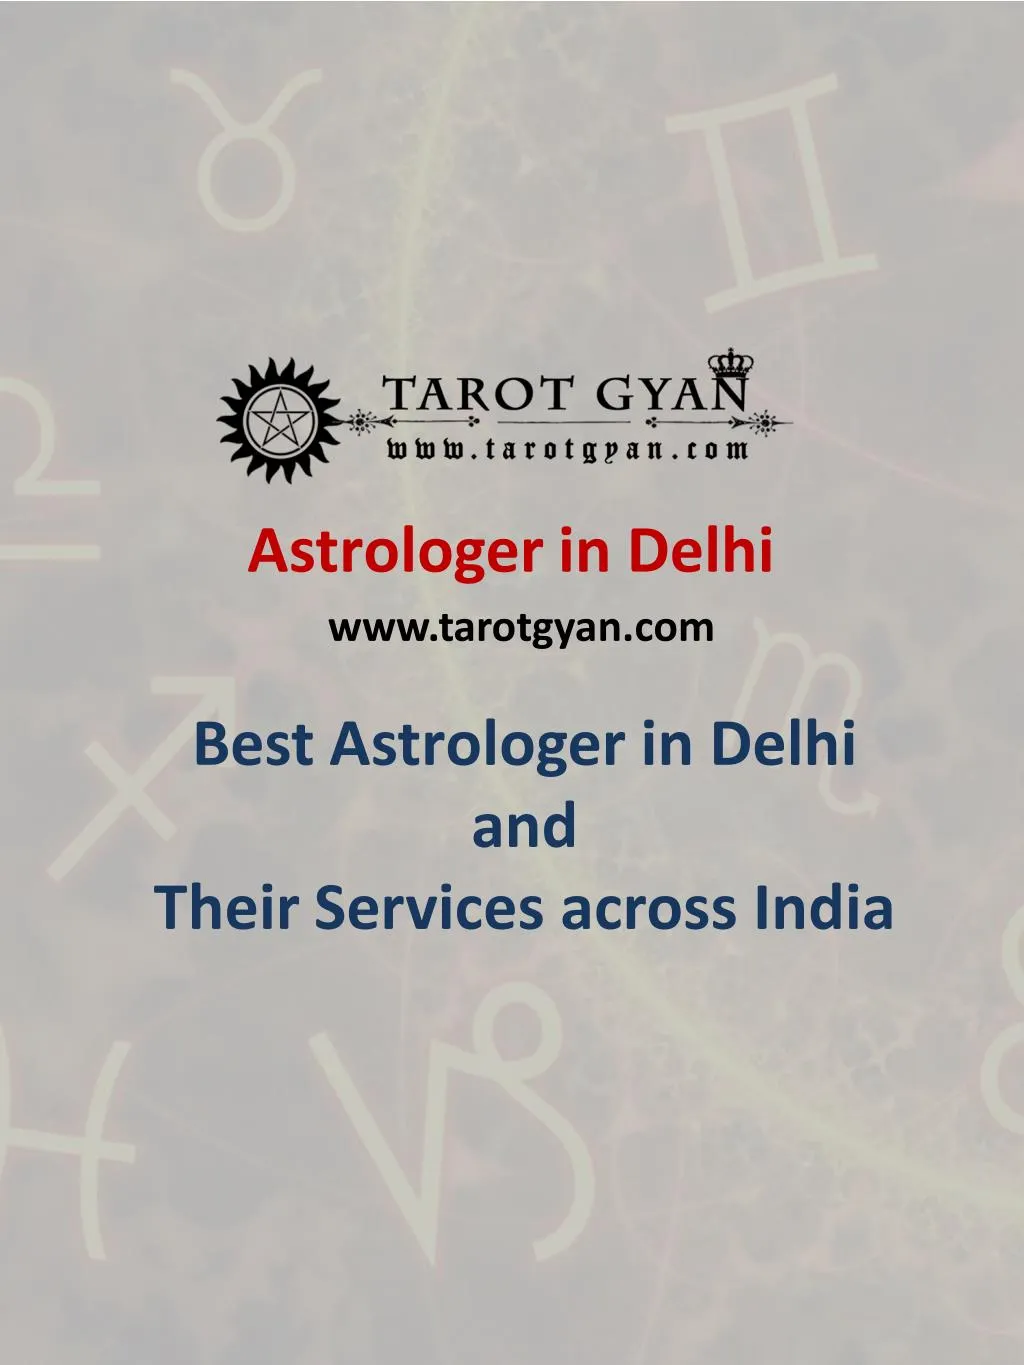 astrologer in delhi www tarotgyan com